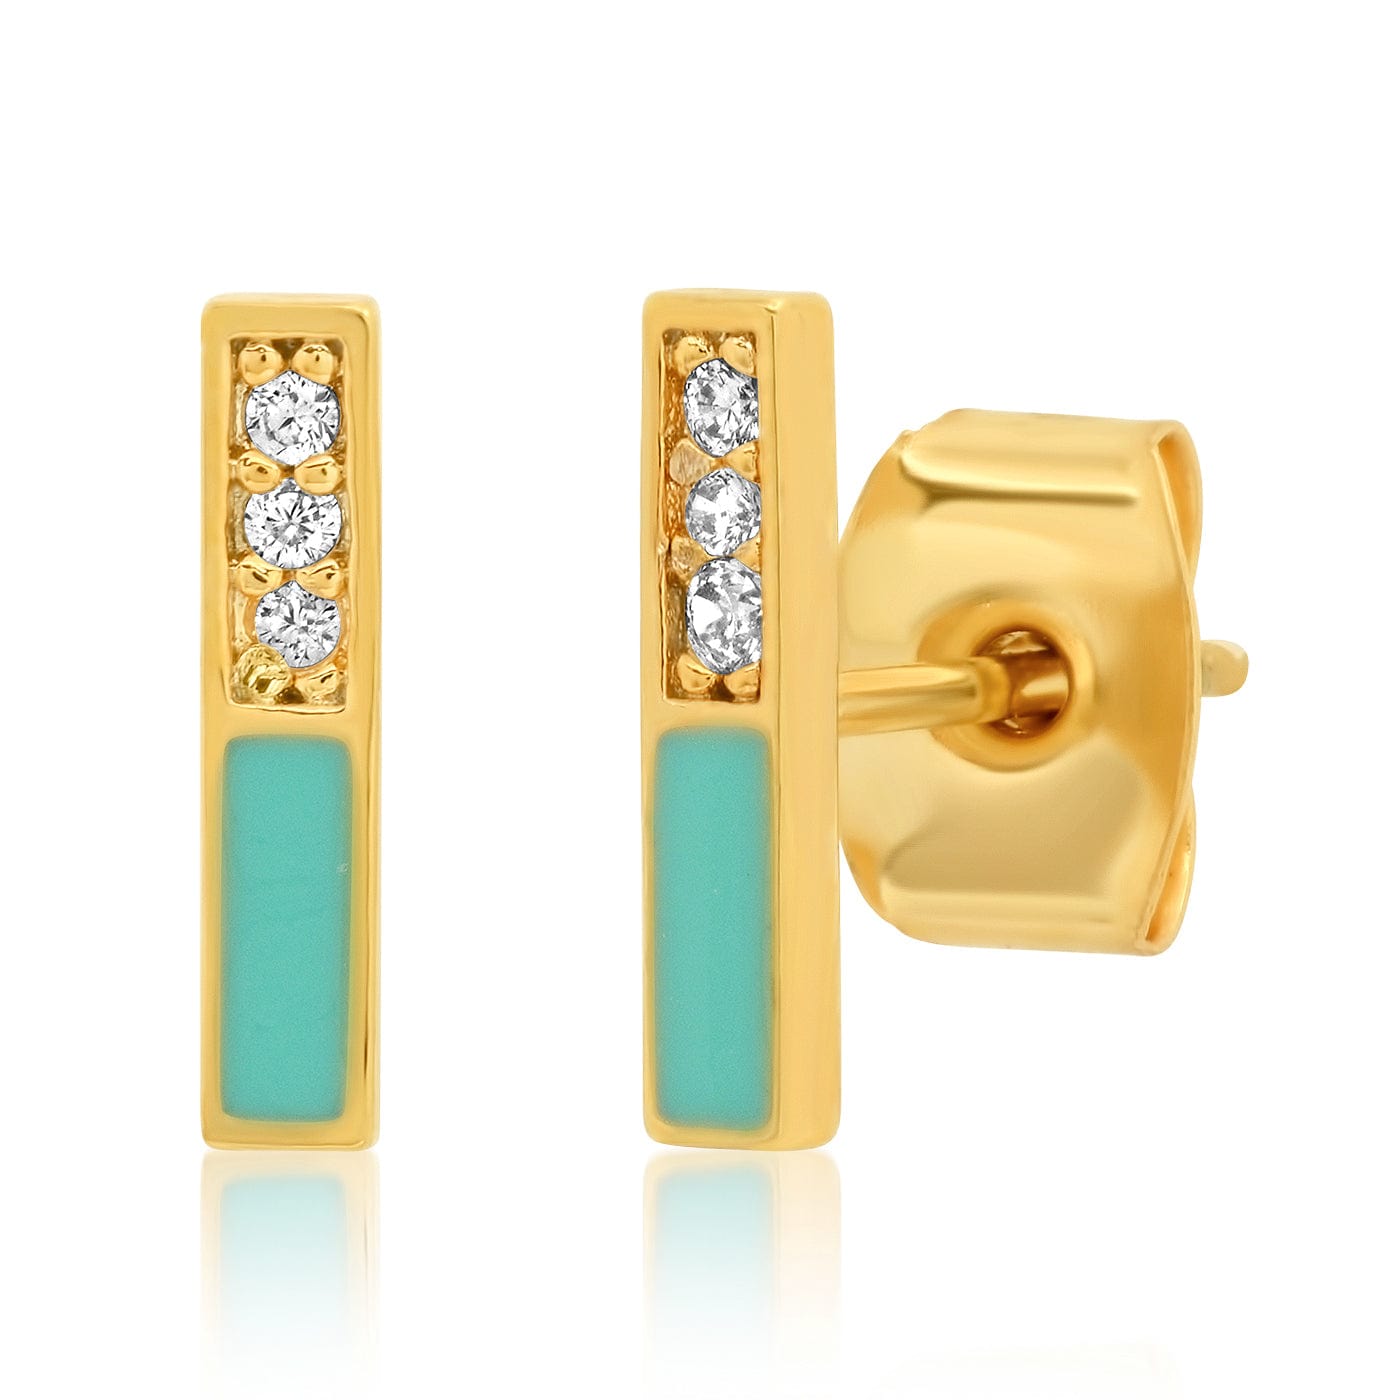 TAI JEWELRY Earrings Turquoise Domino Bars With Cz Studs